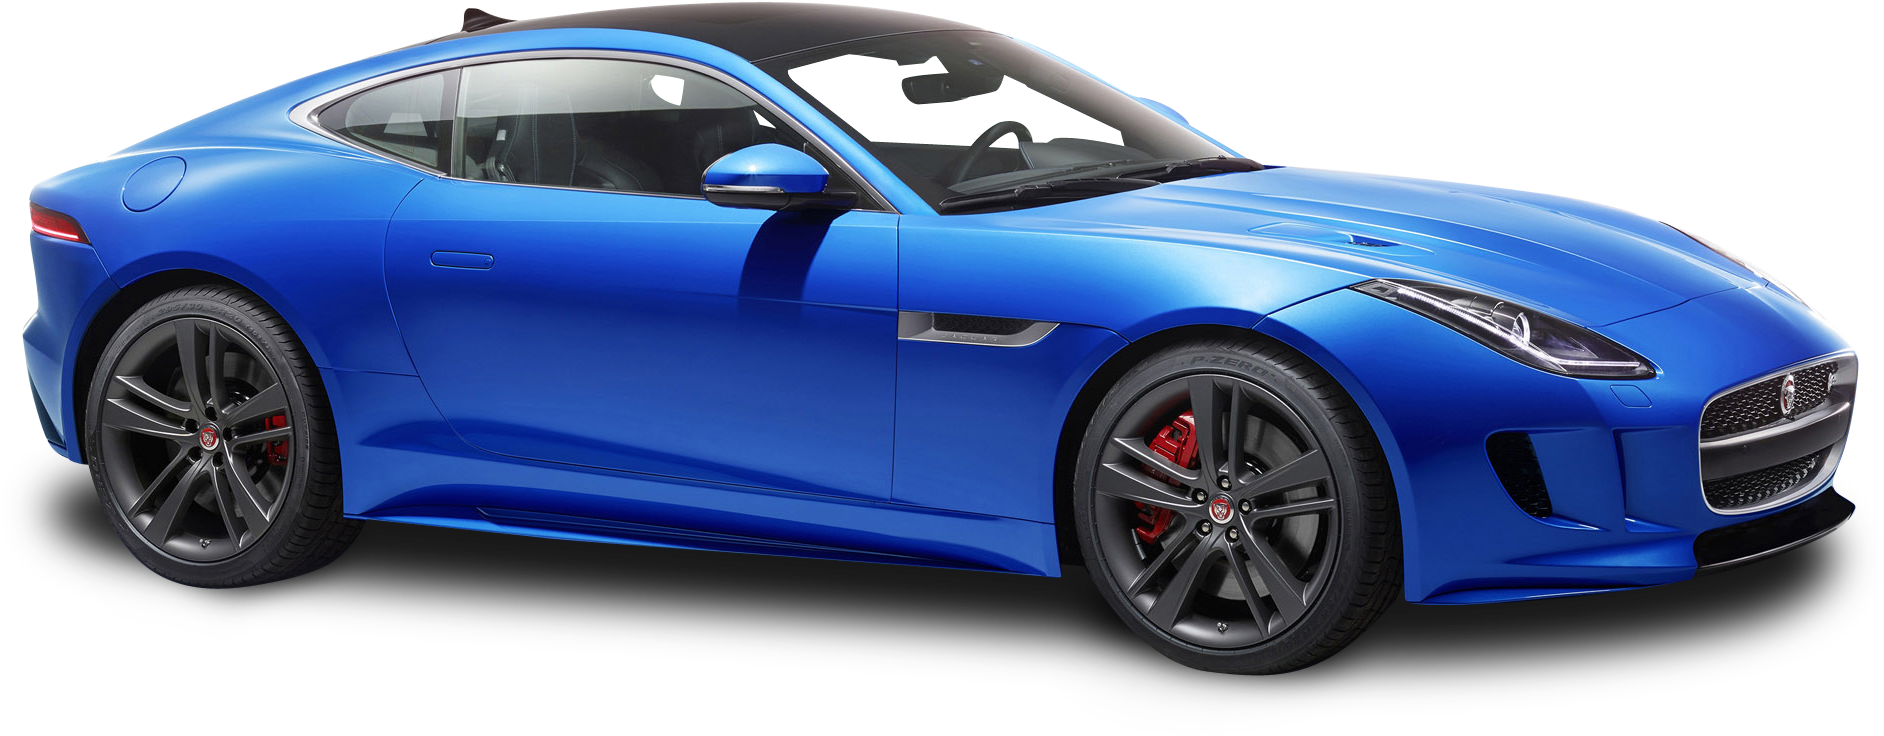 Blue Luxury Sports Car P N G PNG